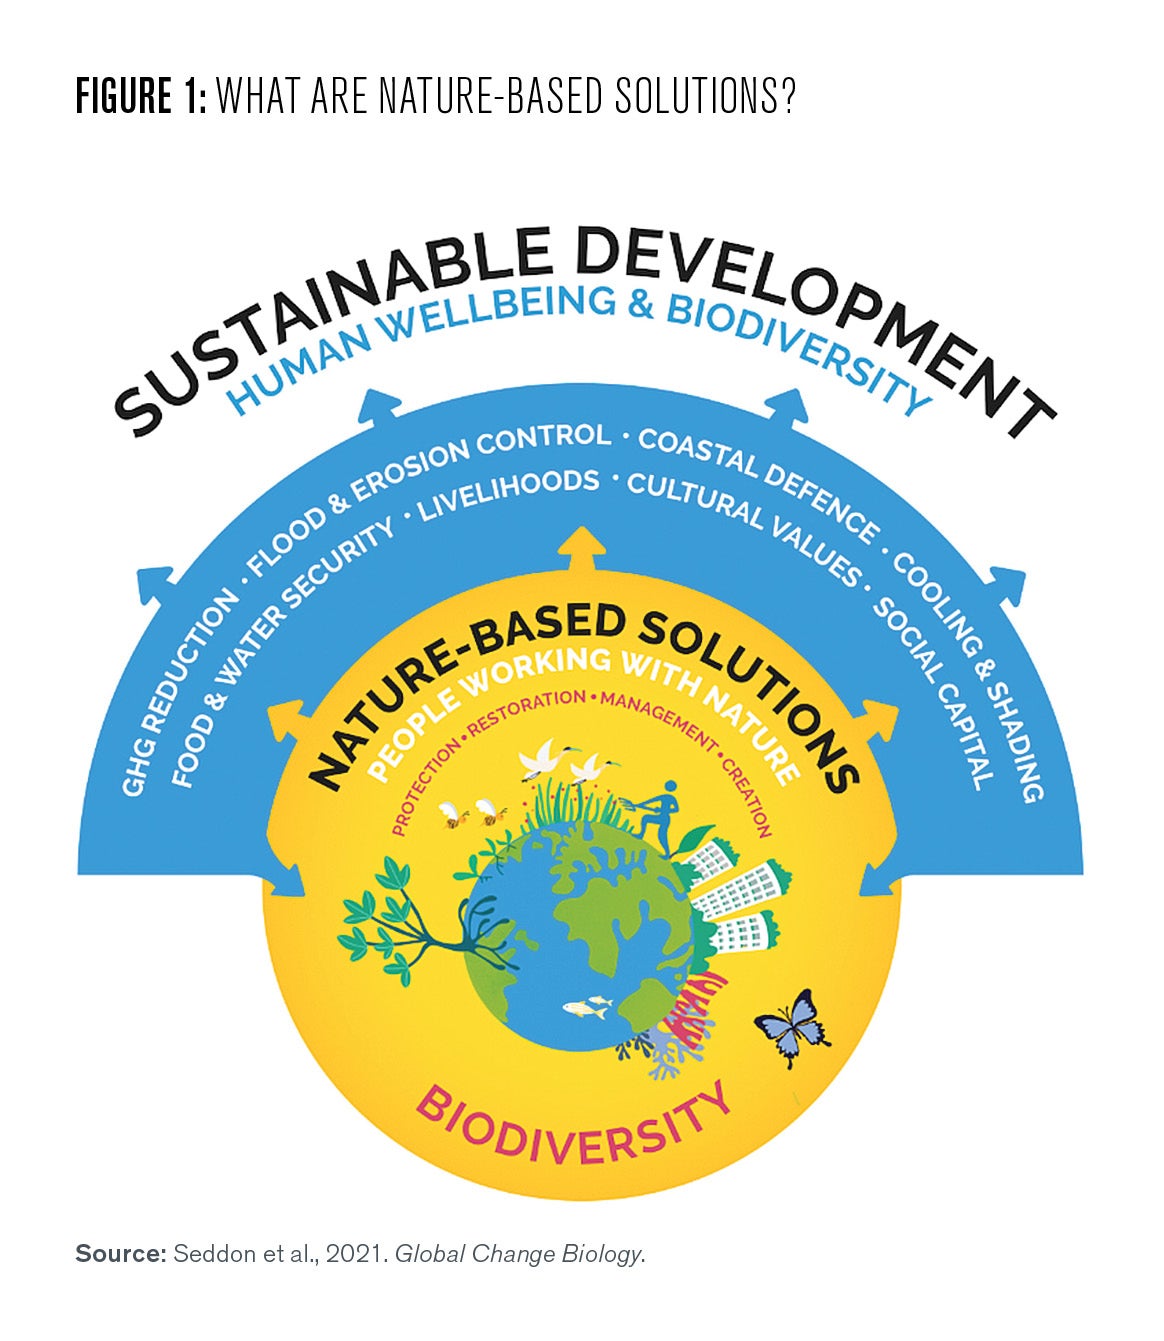 PDF) A functional vulnerability framework for biodiversity conservation